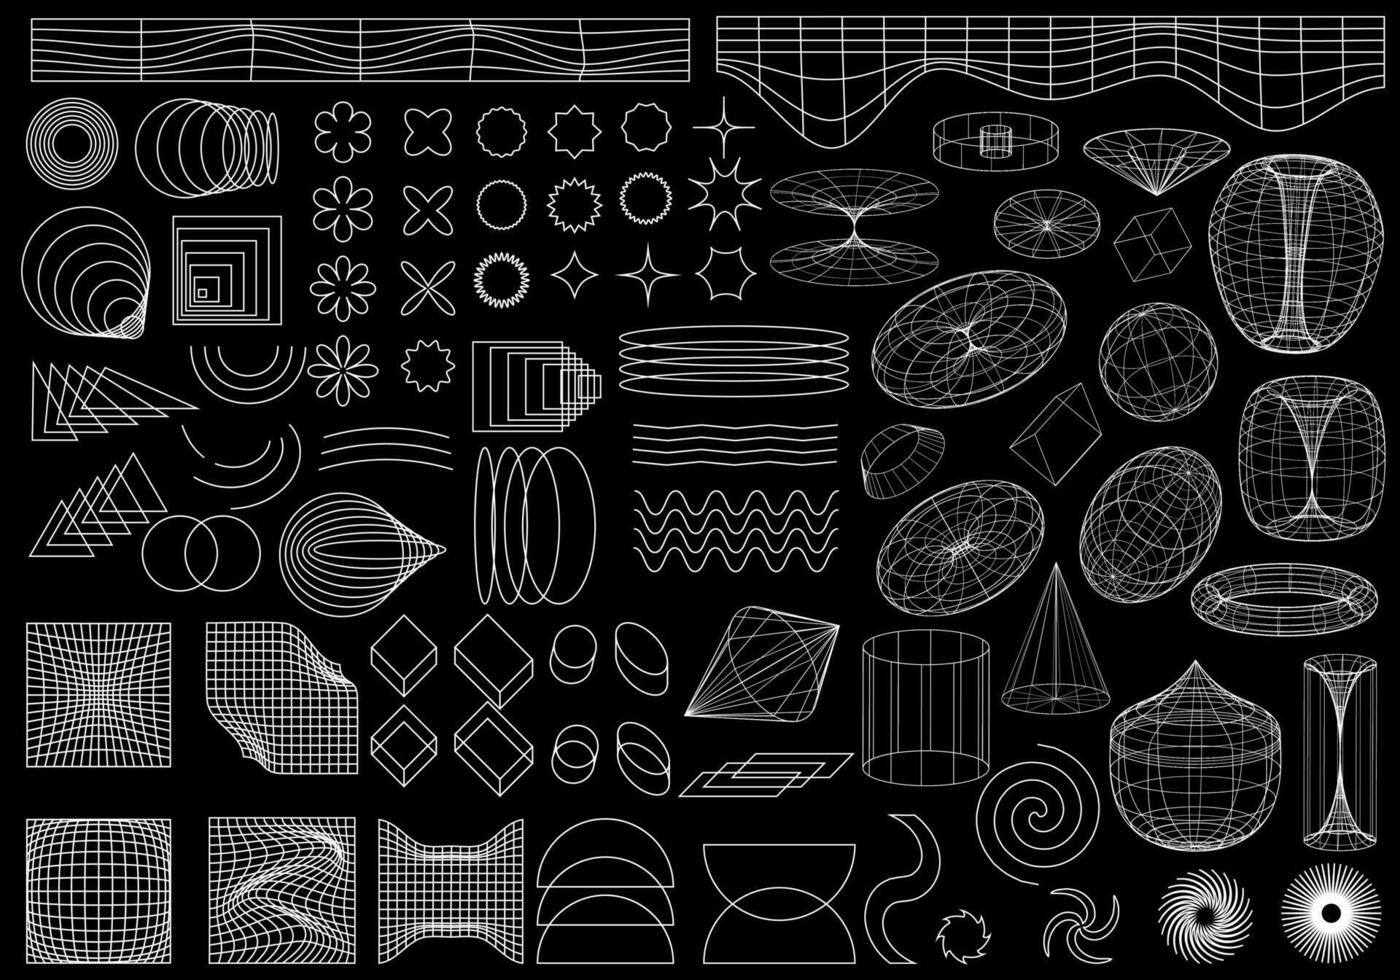 geometrisk trådmodell formulär. abstrakt bakgrunder, mönster, cyberpunk element i en modern psychedelic rave stil. retro-futuristisk estetik av de 00-talet 2000. vektor